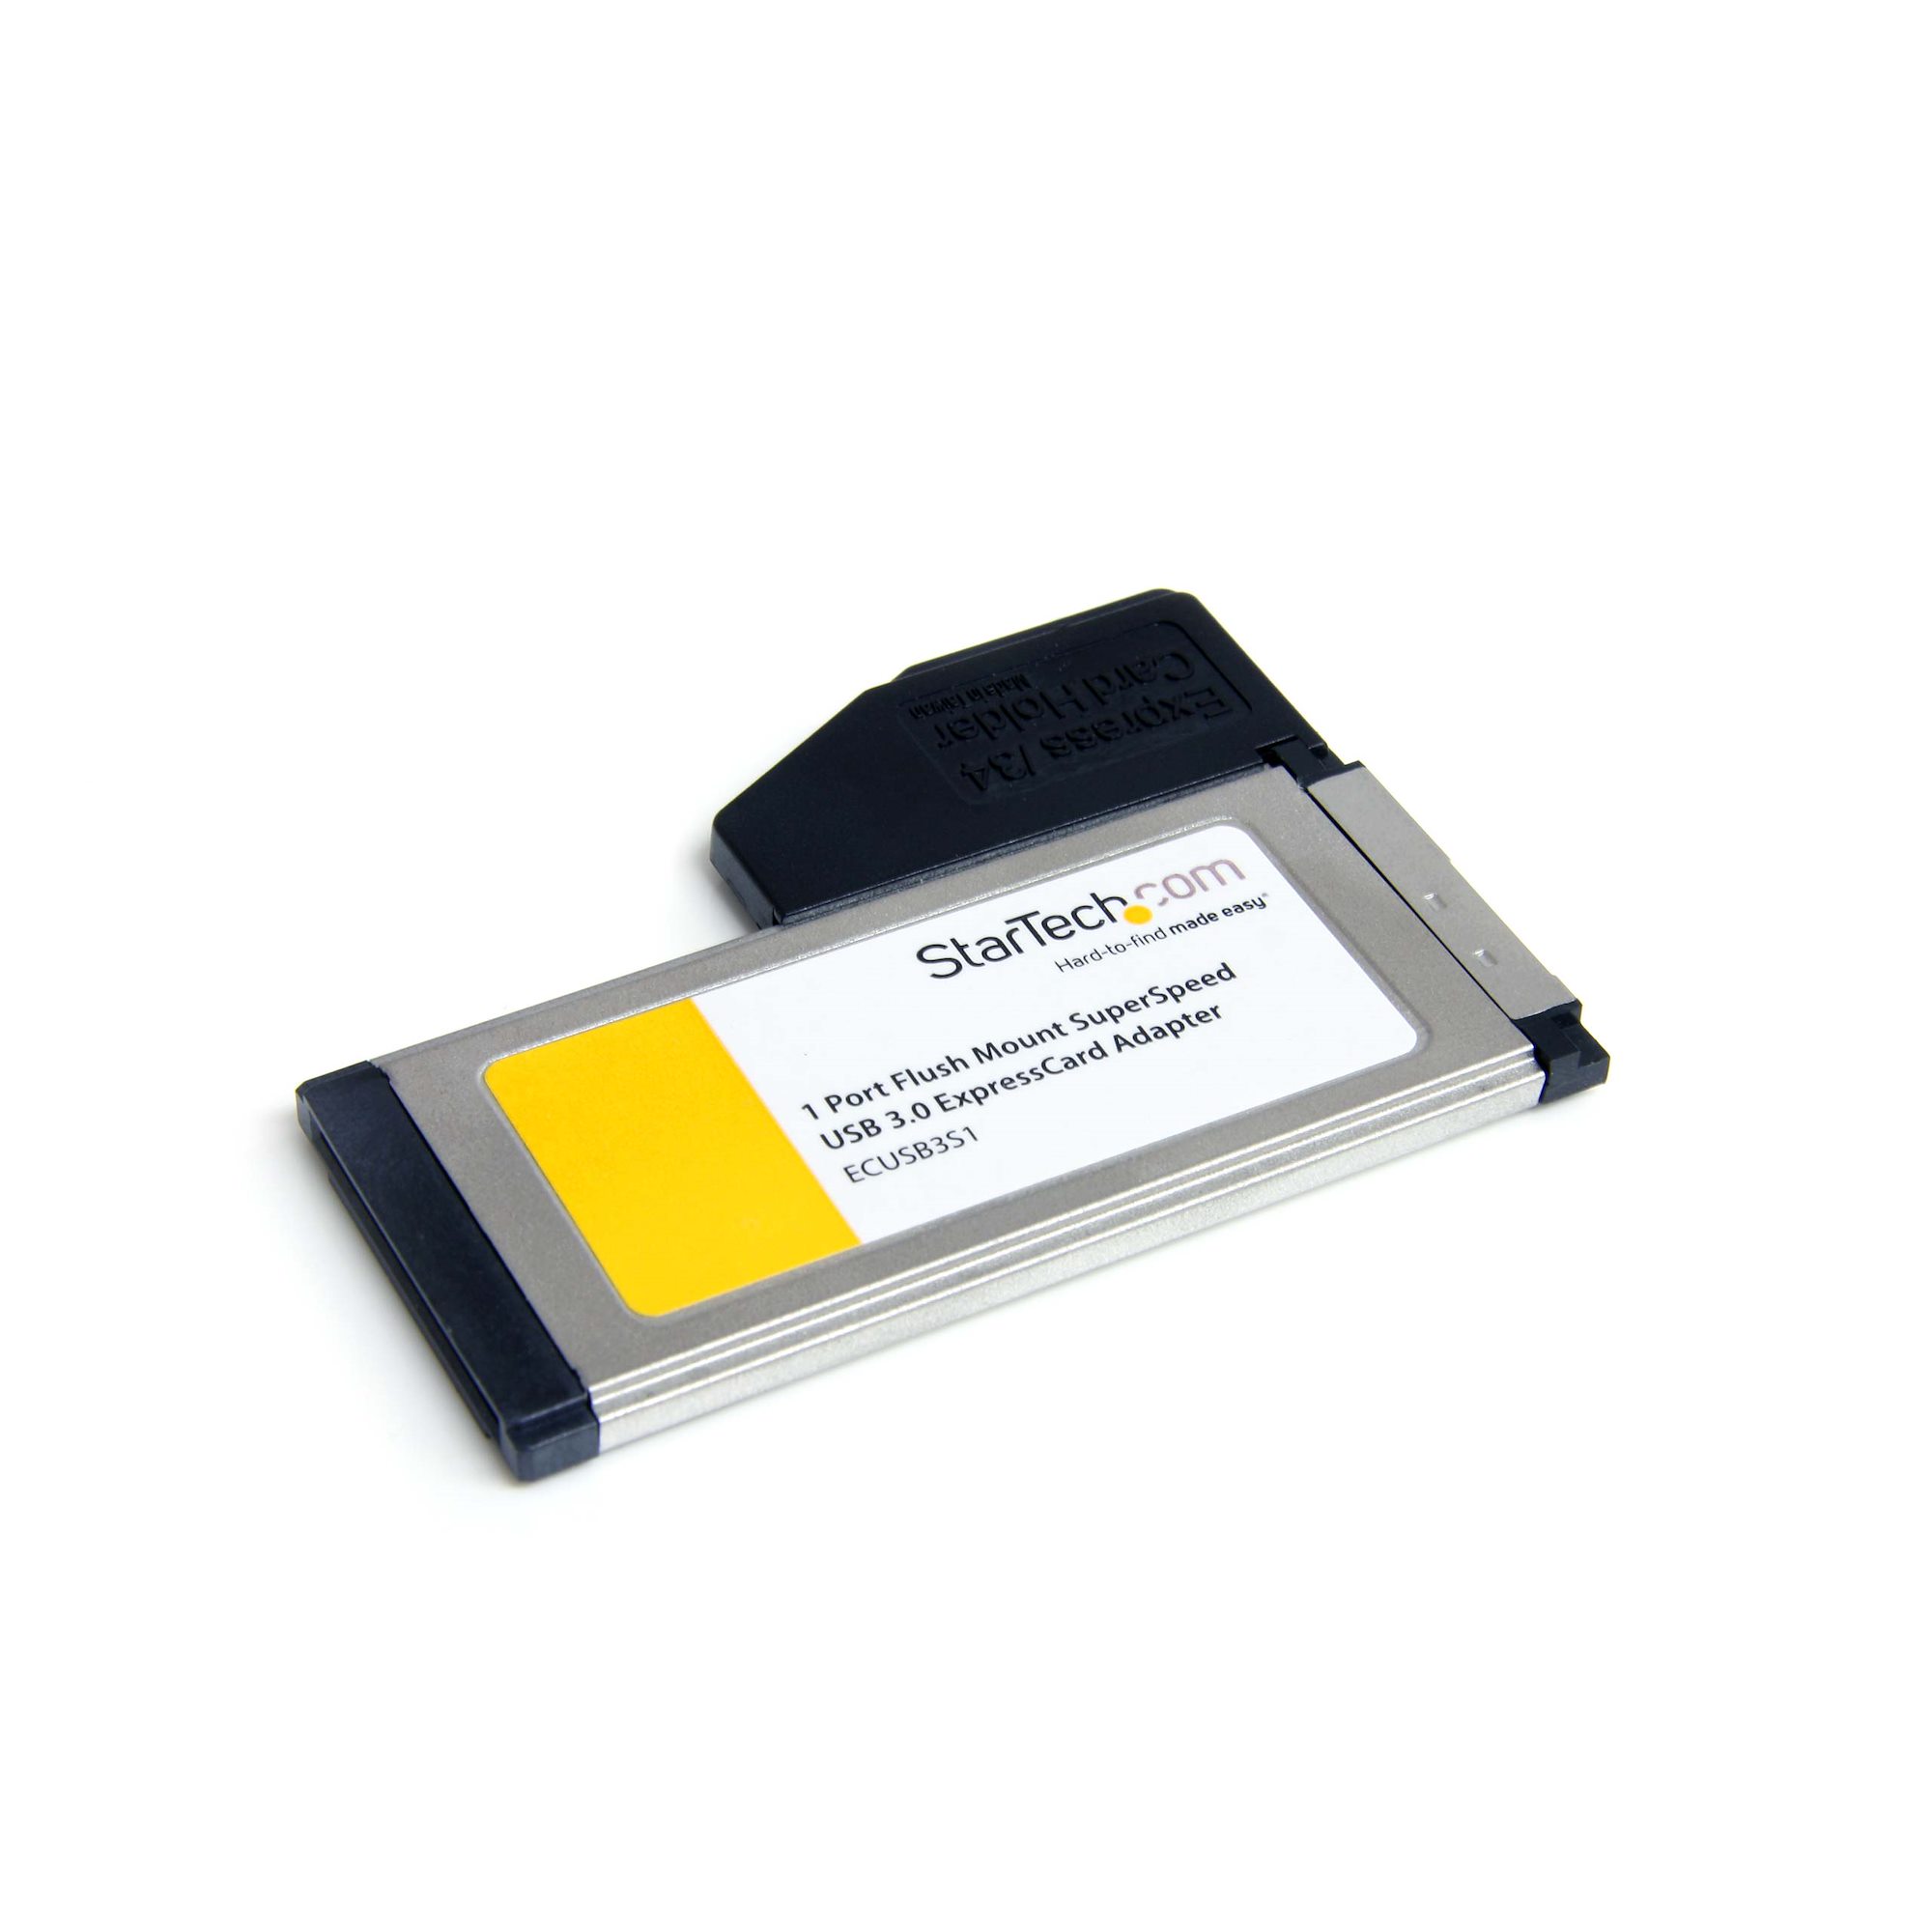 1x Flush Mount ExpressCard USB 3 Card - USB 3.0 Cards